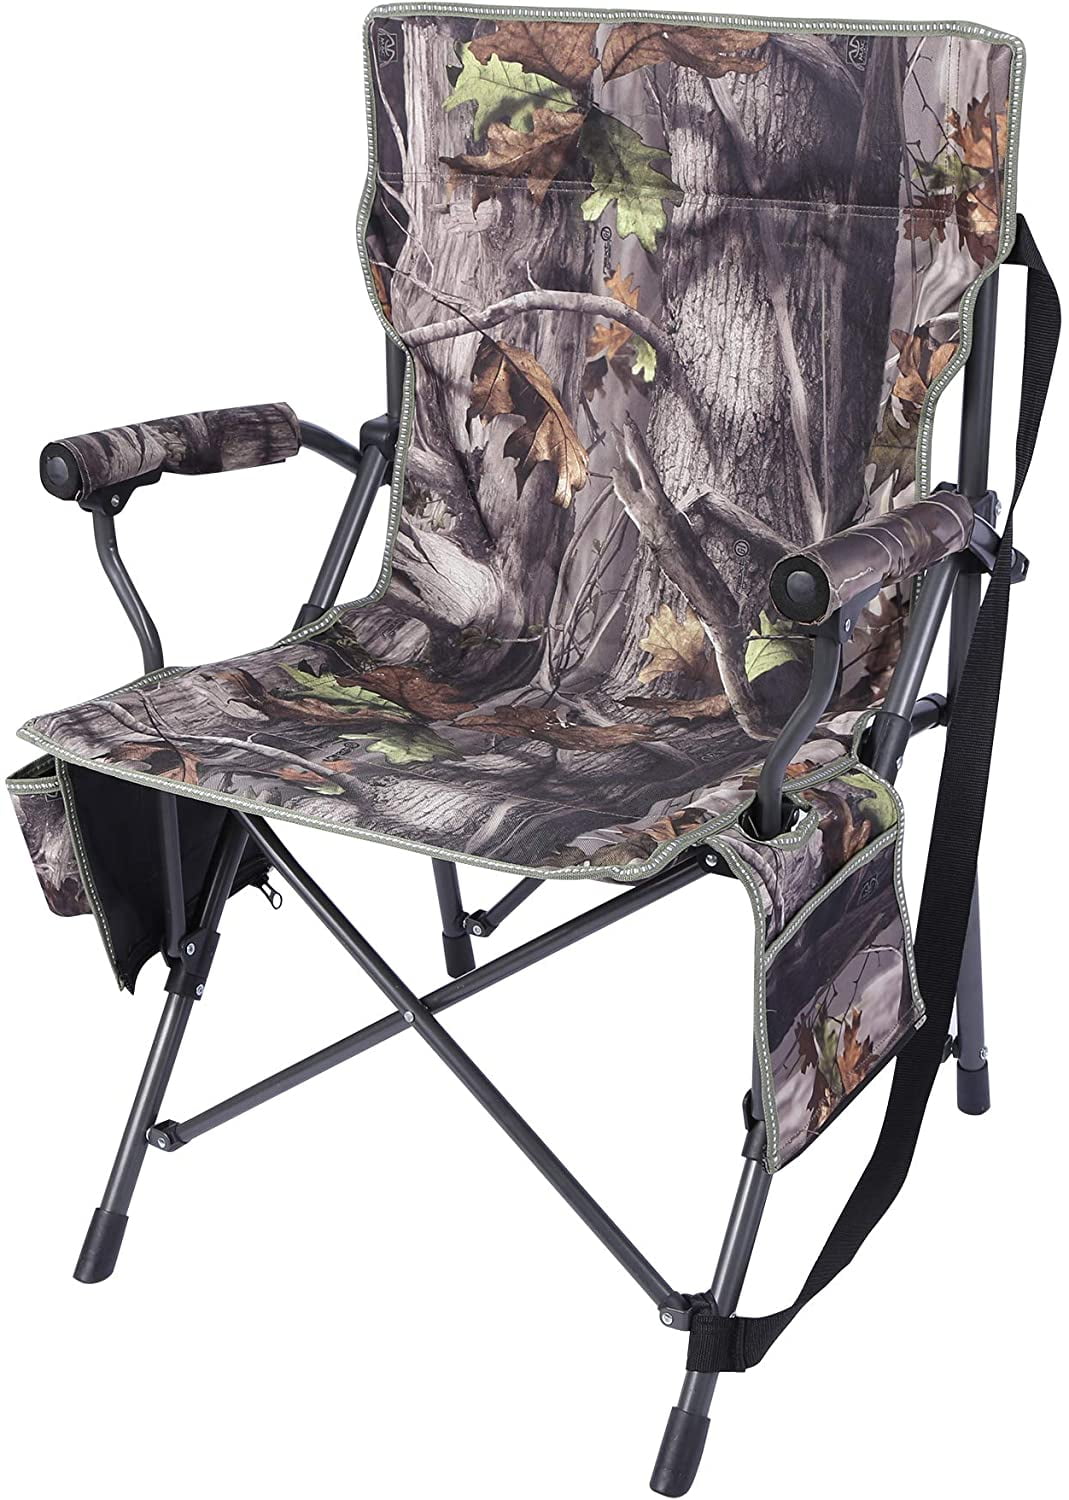 Camo Realtree Folding Chair Portable Foidaway Fishing Shooting Seat Camping New 